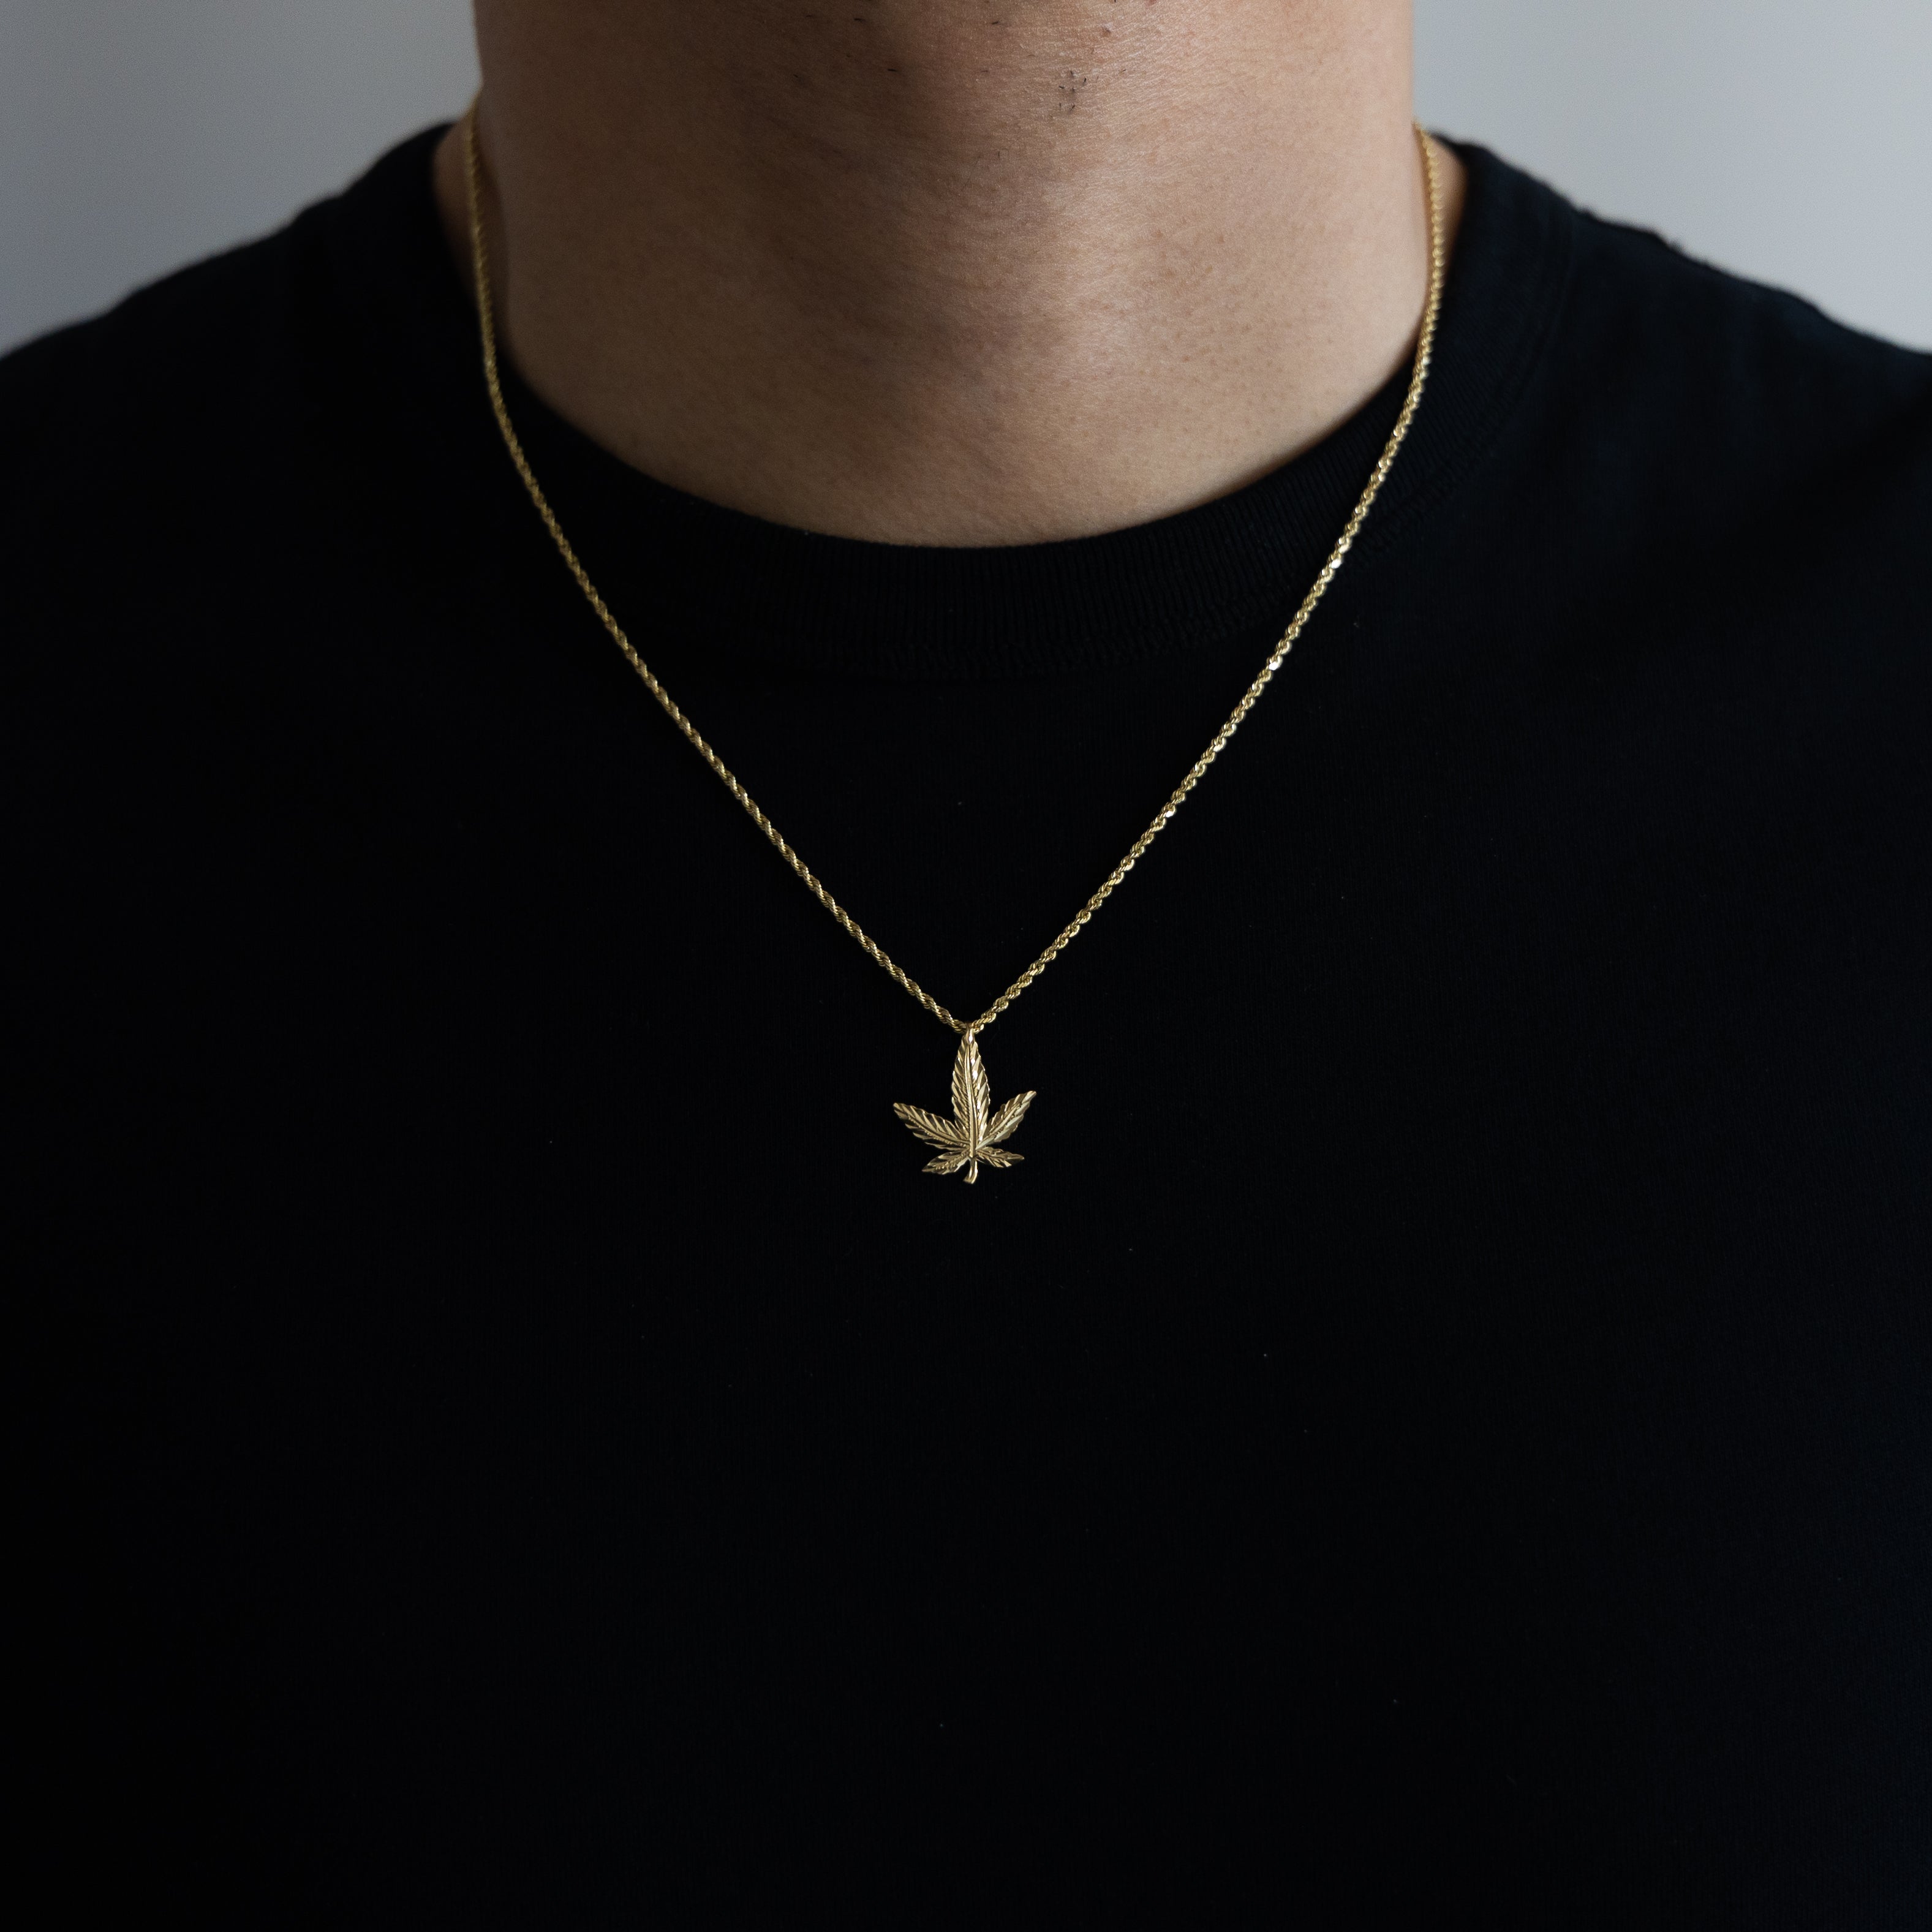 Gold Marijuana Leaf Pendant Model-1567 - Charlie & Co. Jewelry